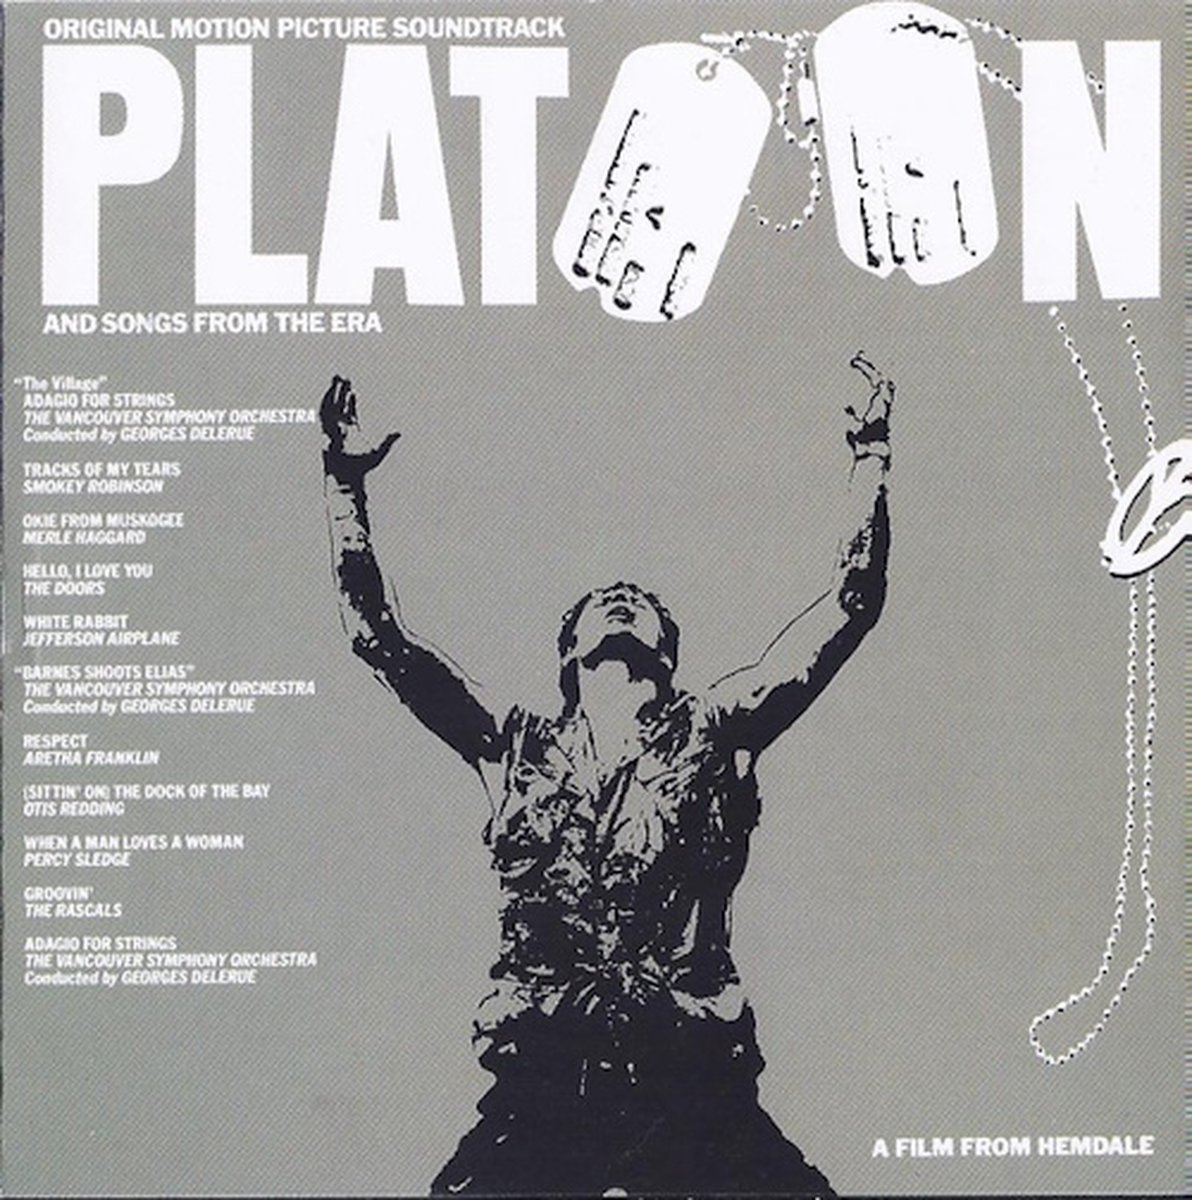 Platoon - various artists